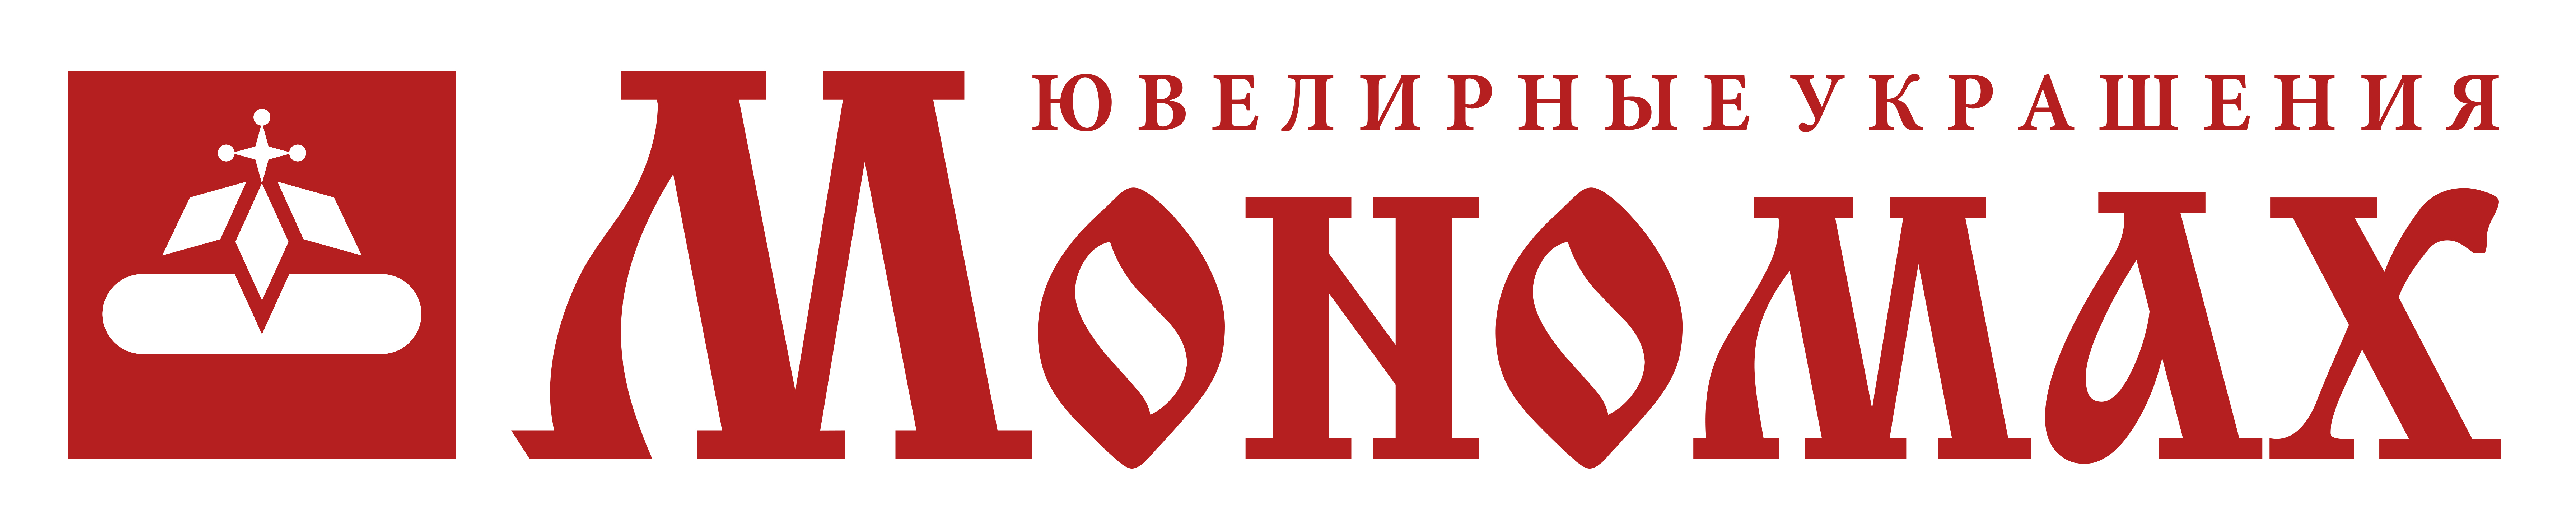 monomah logo